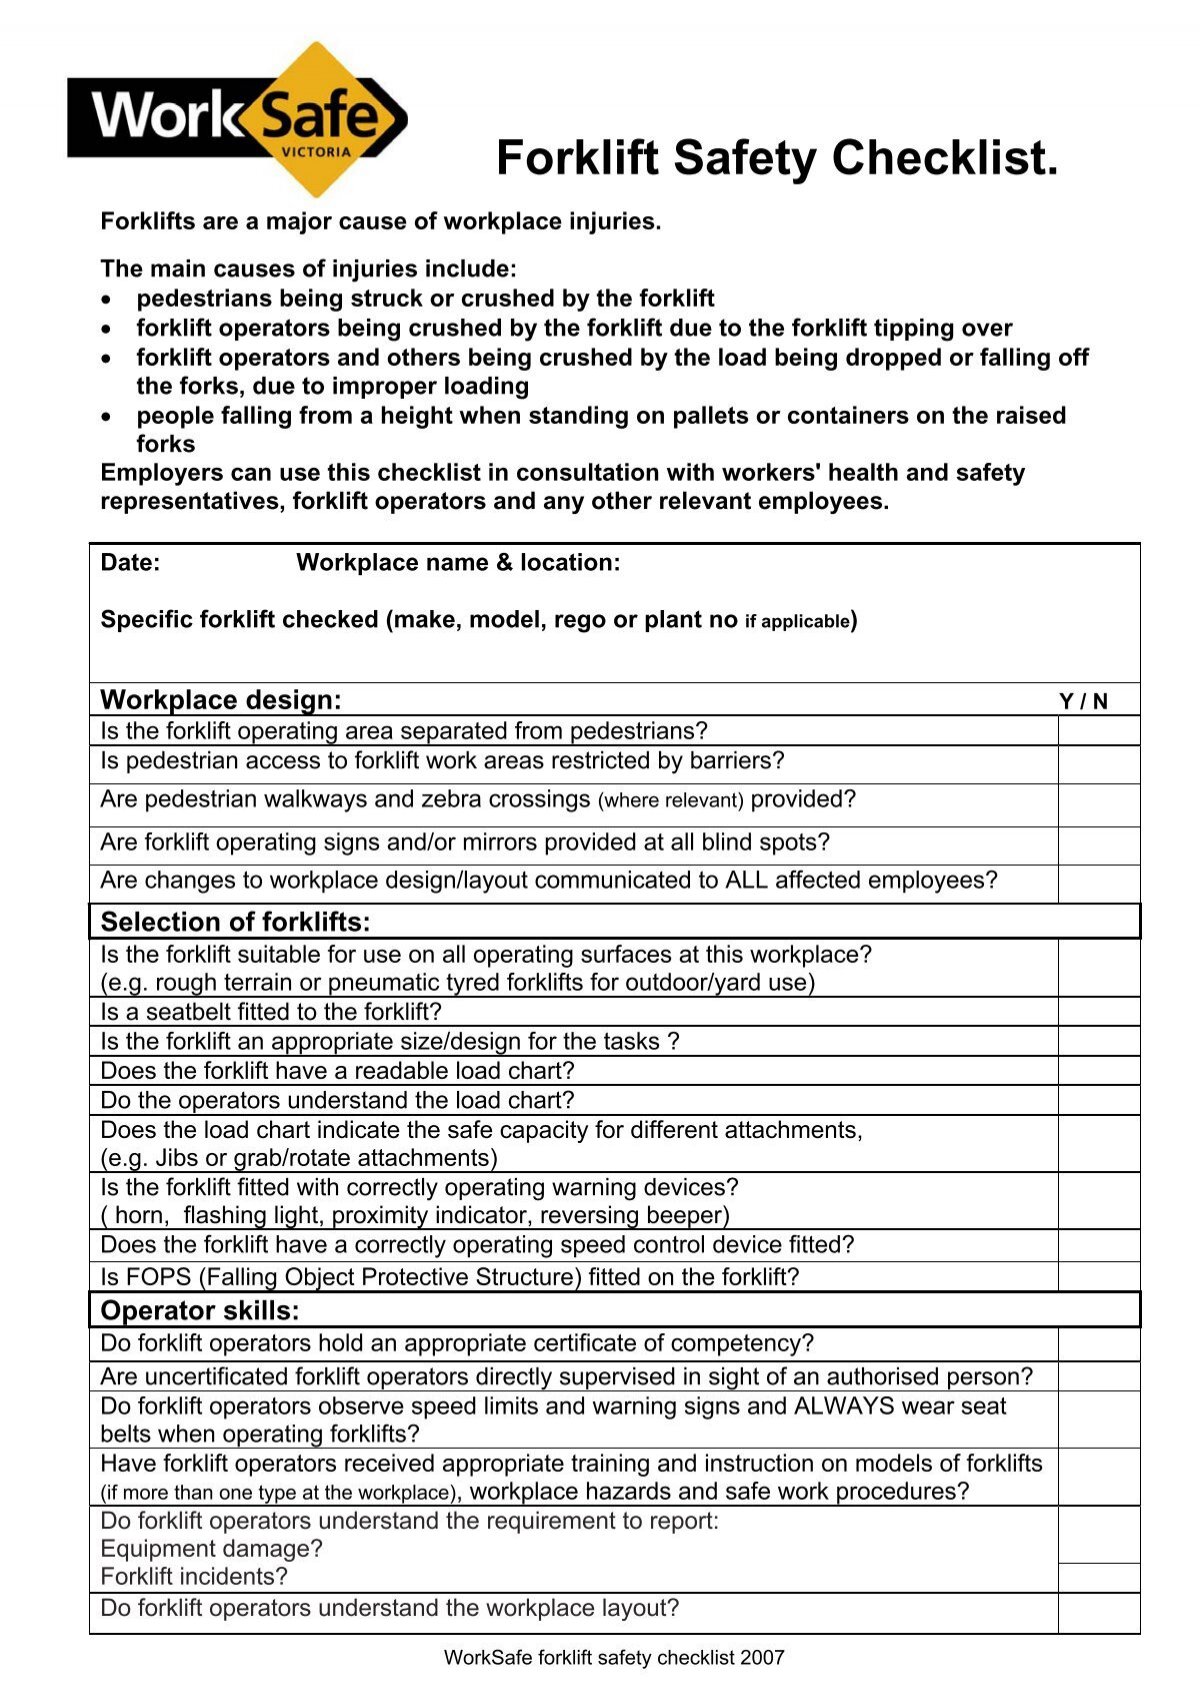 forklift-safety-checklist-pdf-90kb